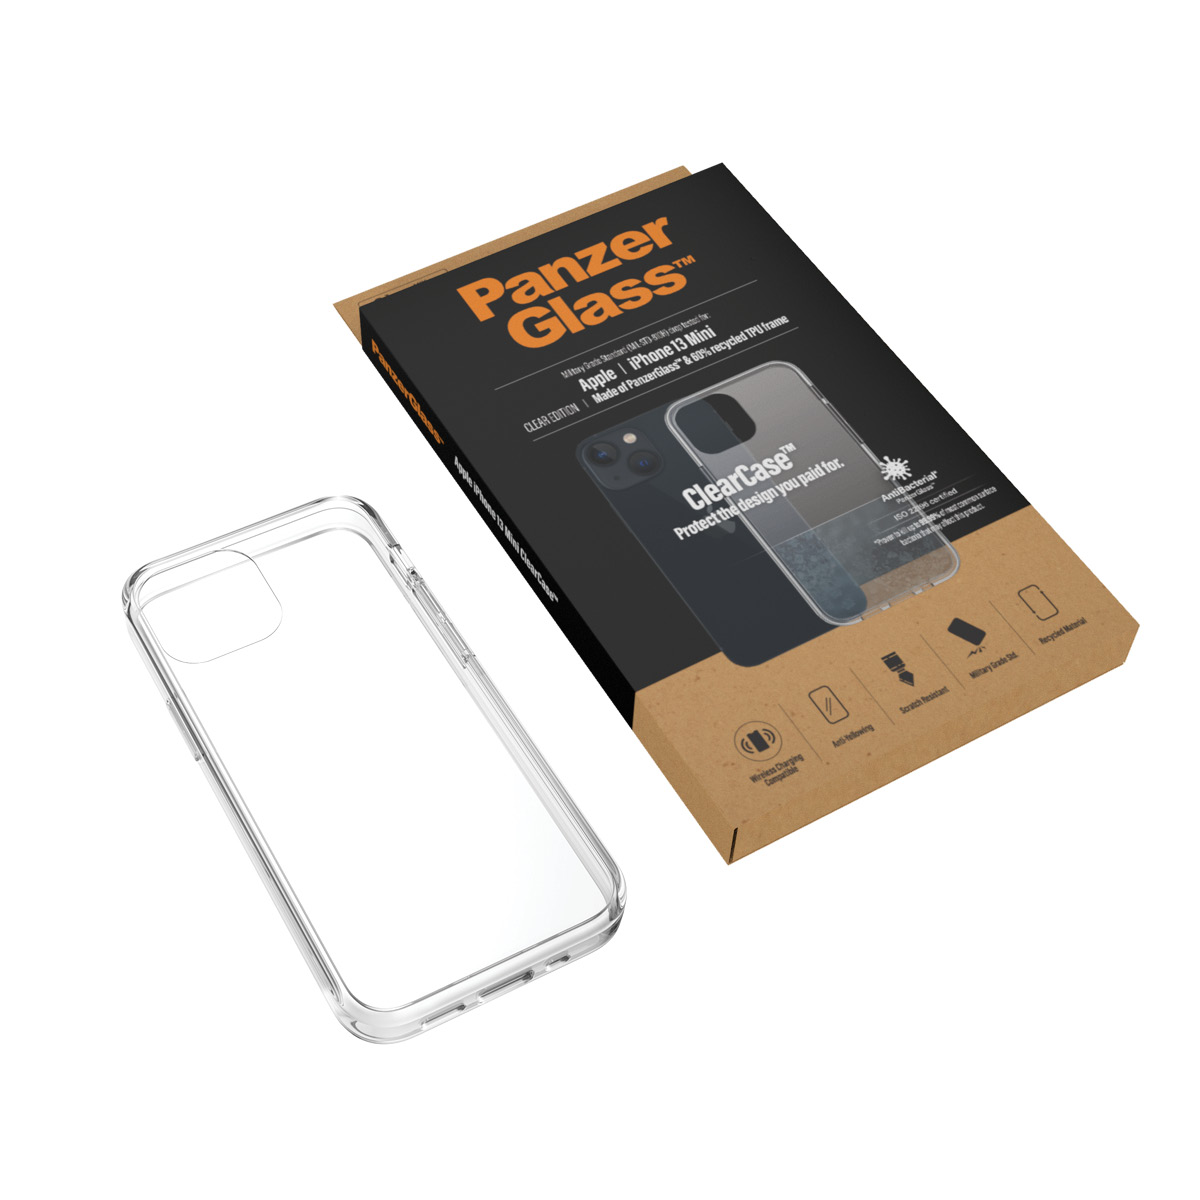 PanzerGlasstm ClearCase Apple iPhone 13 Mini thumb